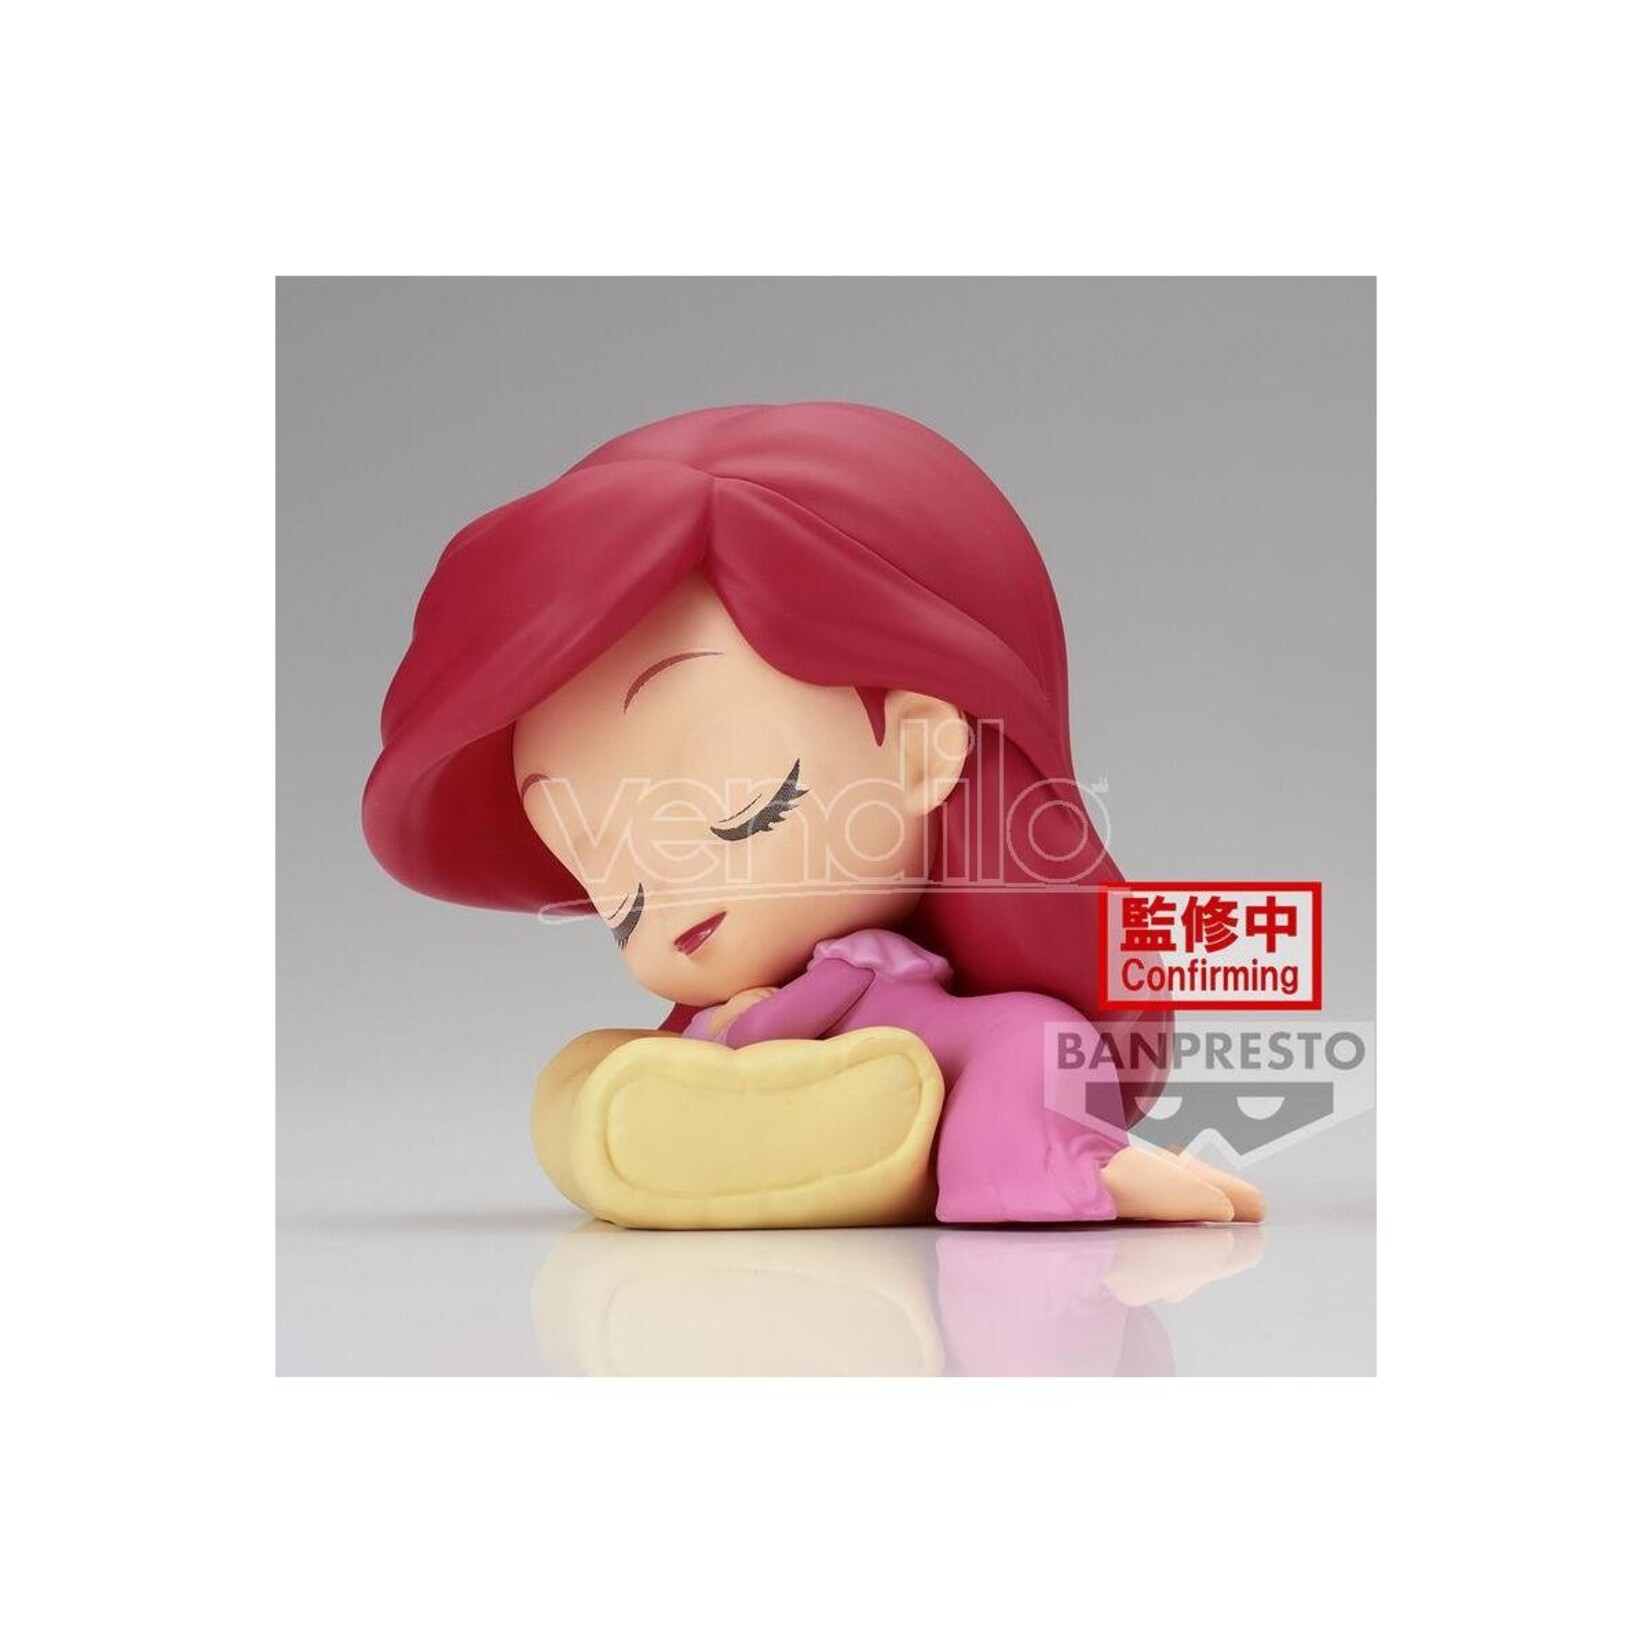 Banpresto Banpresto Disney Q Posket Sleeping Ariel 13 cm